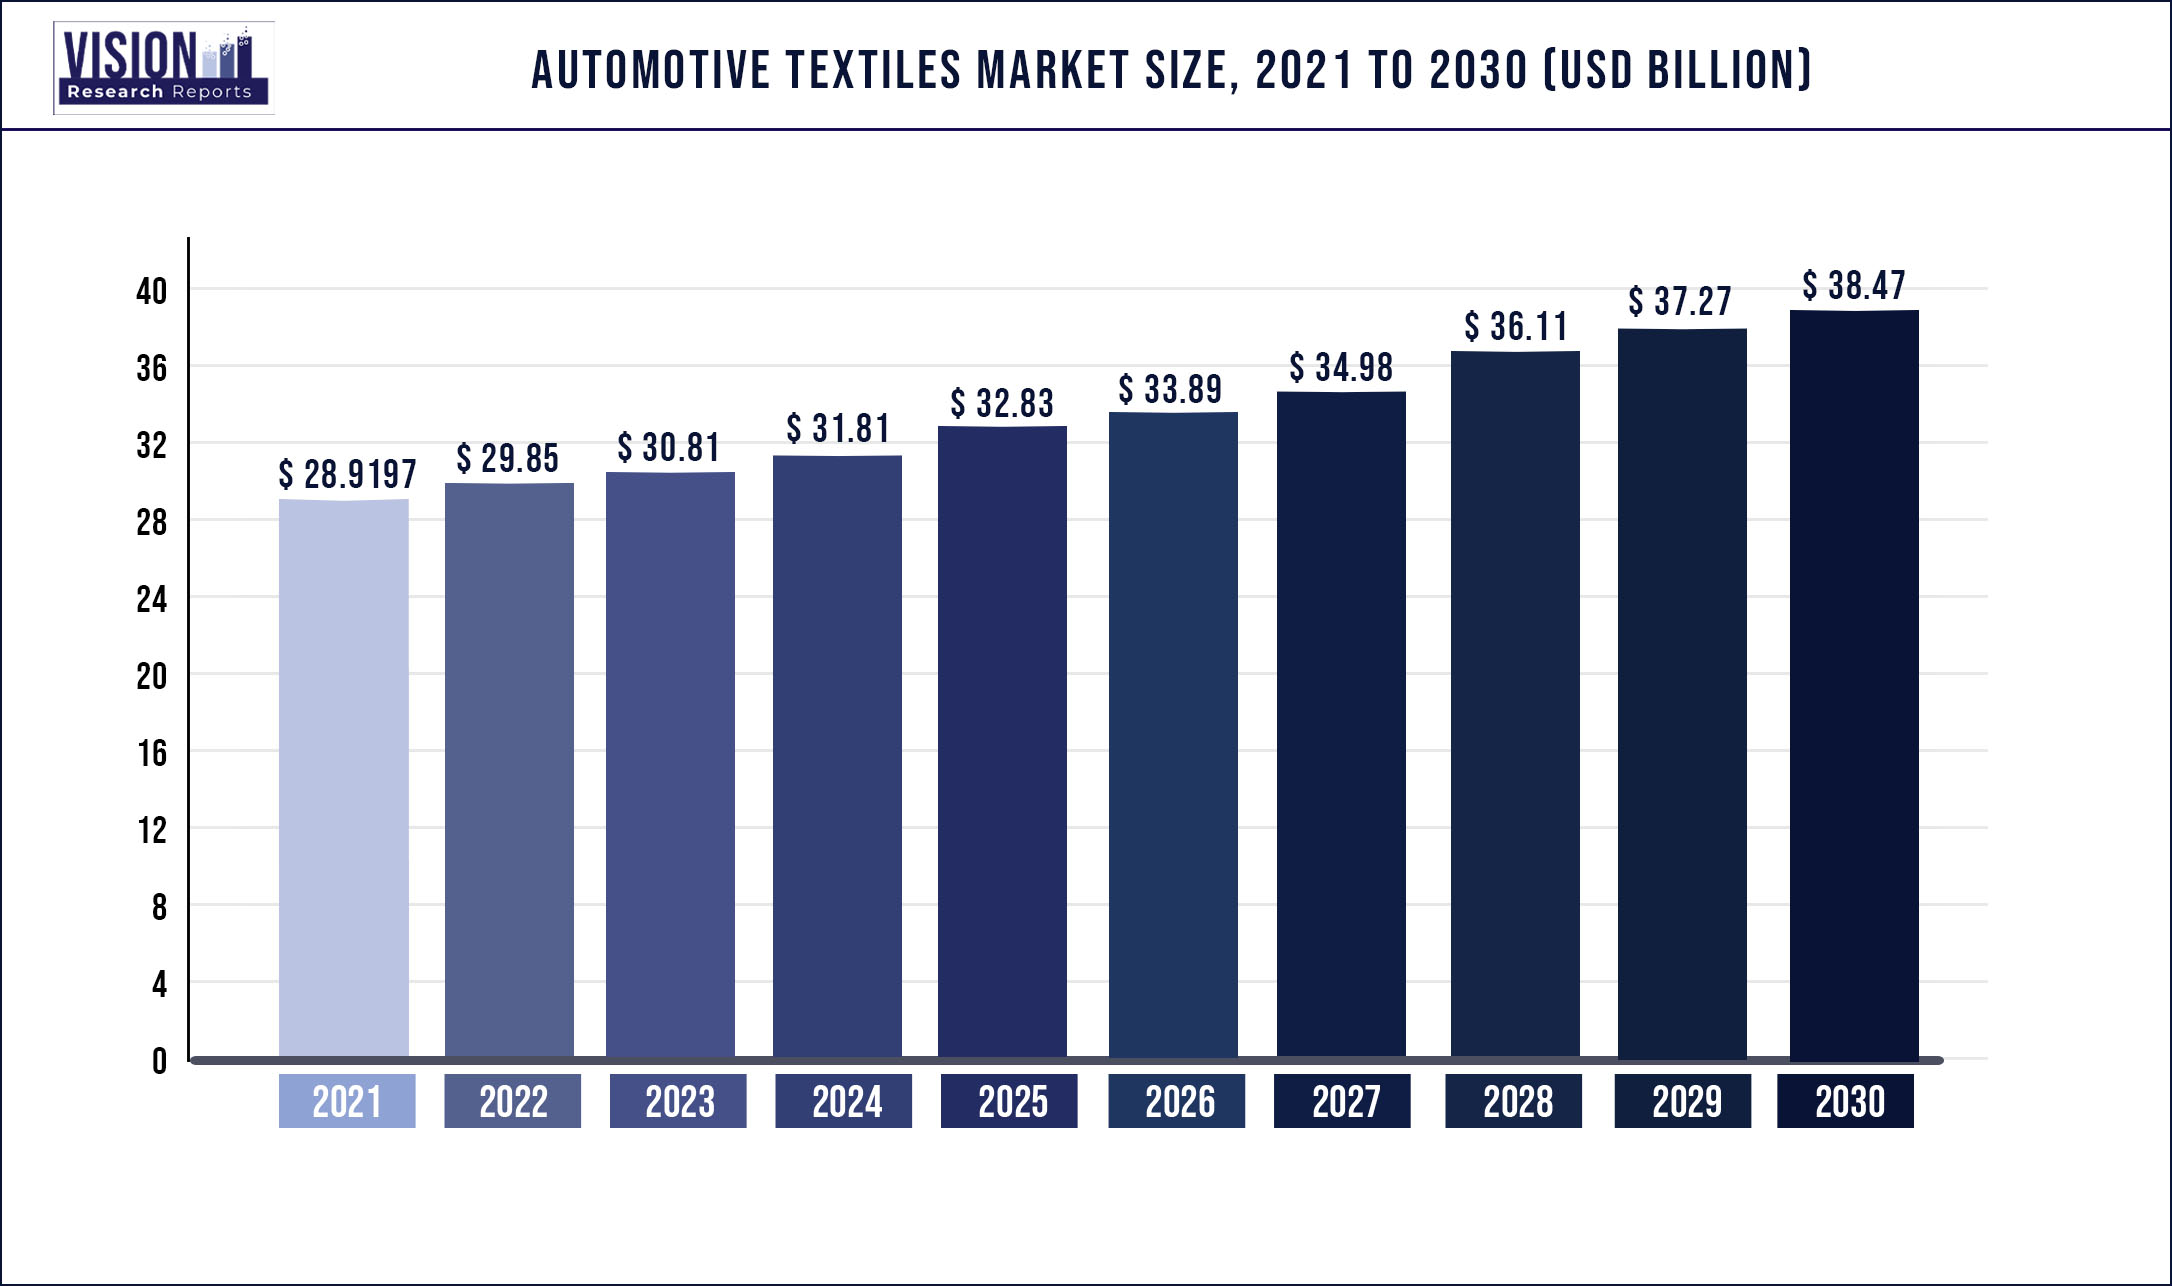 Automotive Textiles Market Size 2021 to 2030